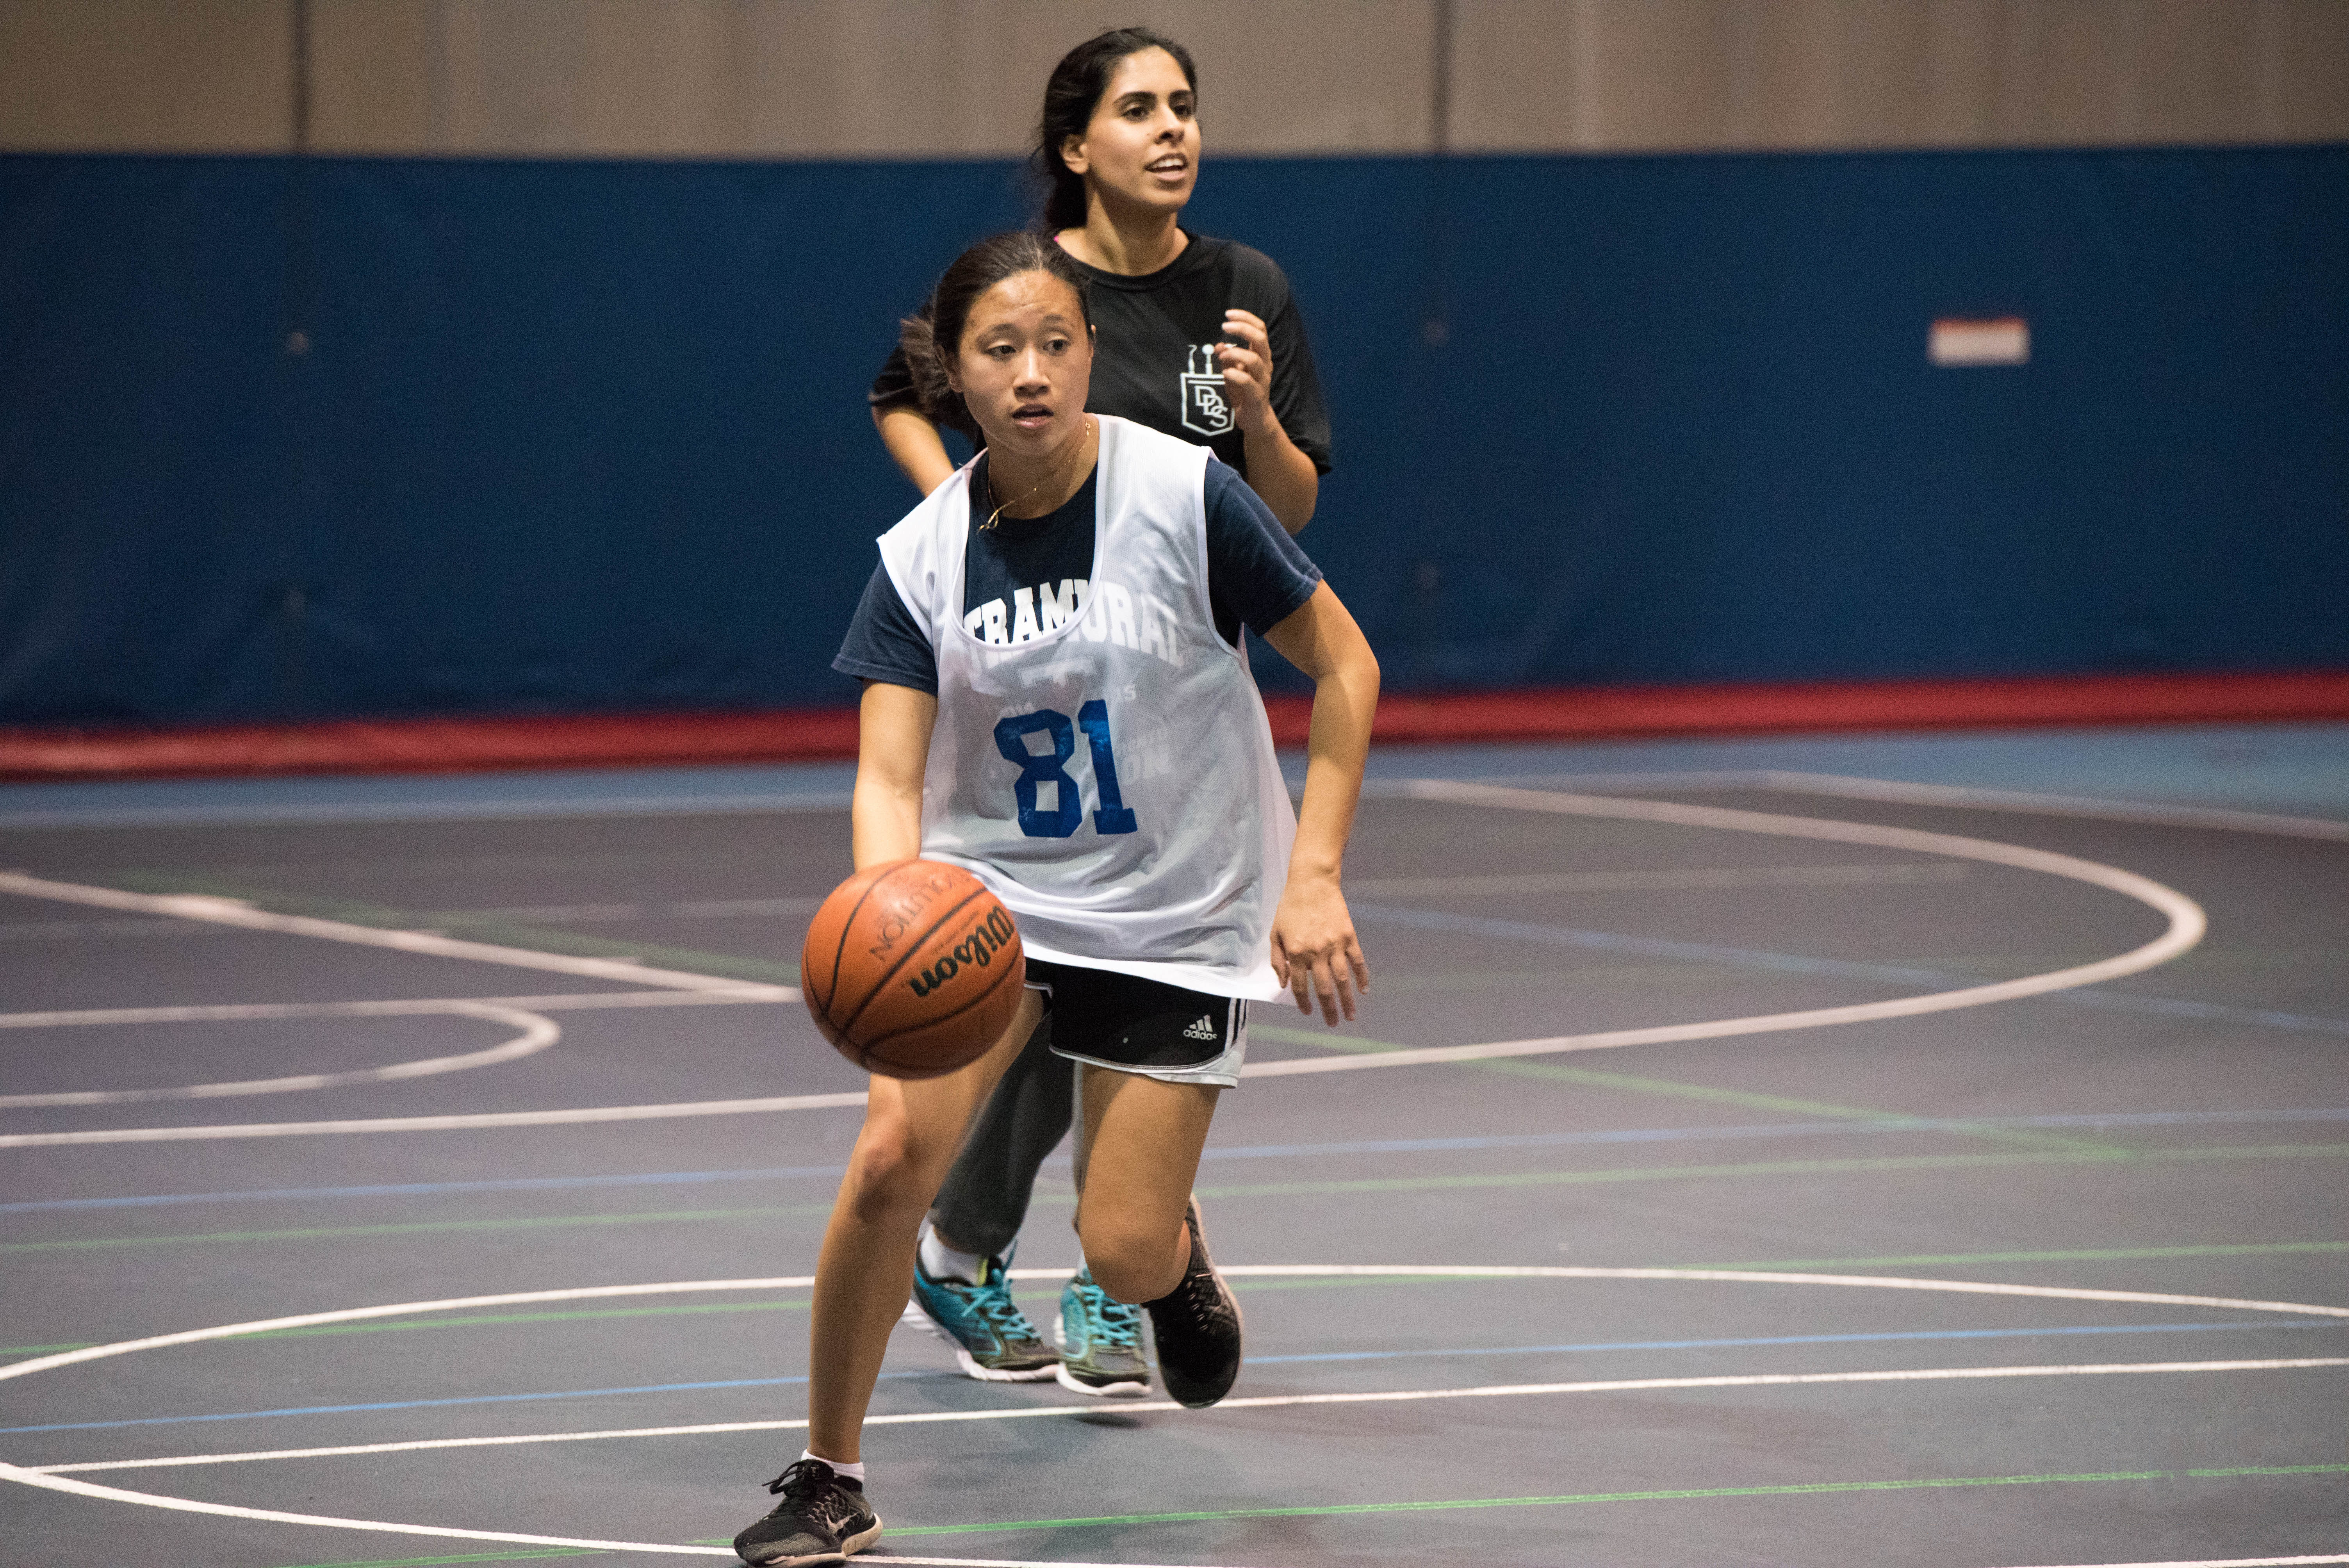 two women playing basketball